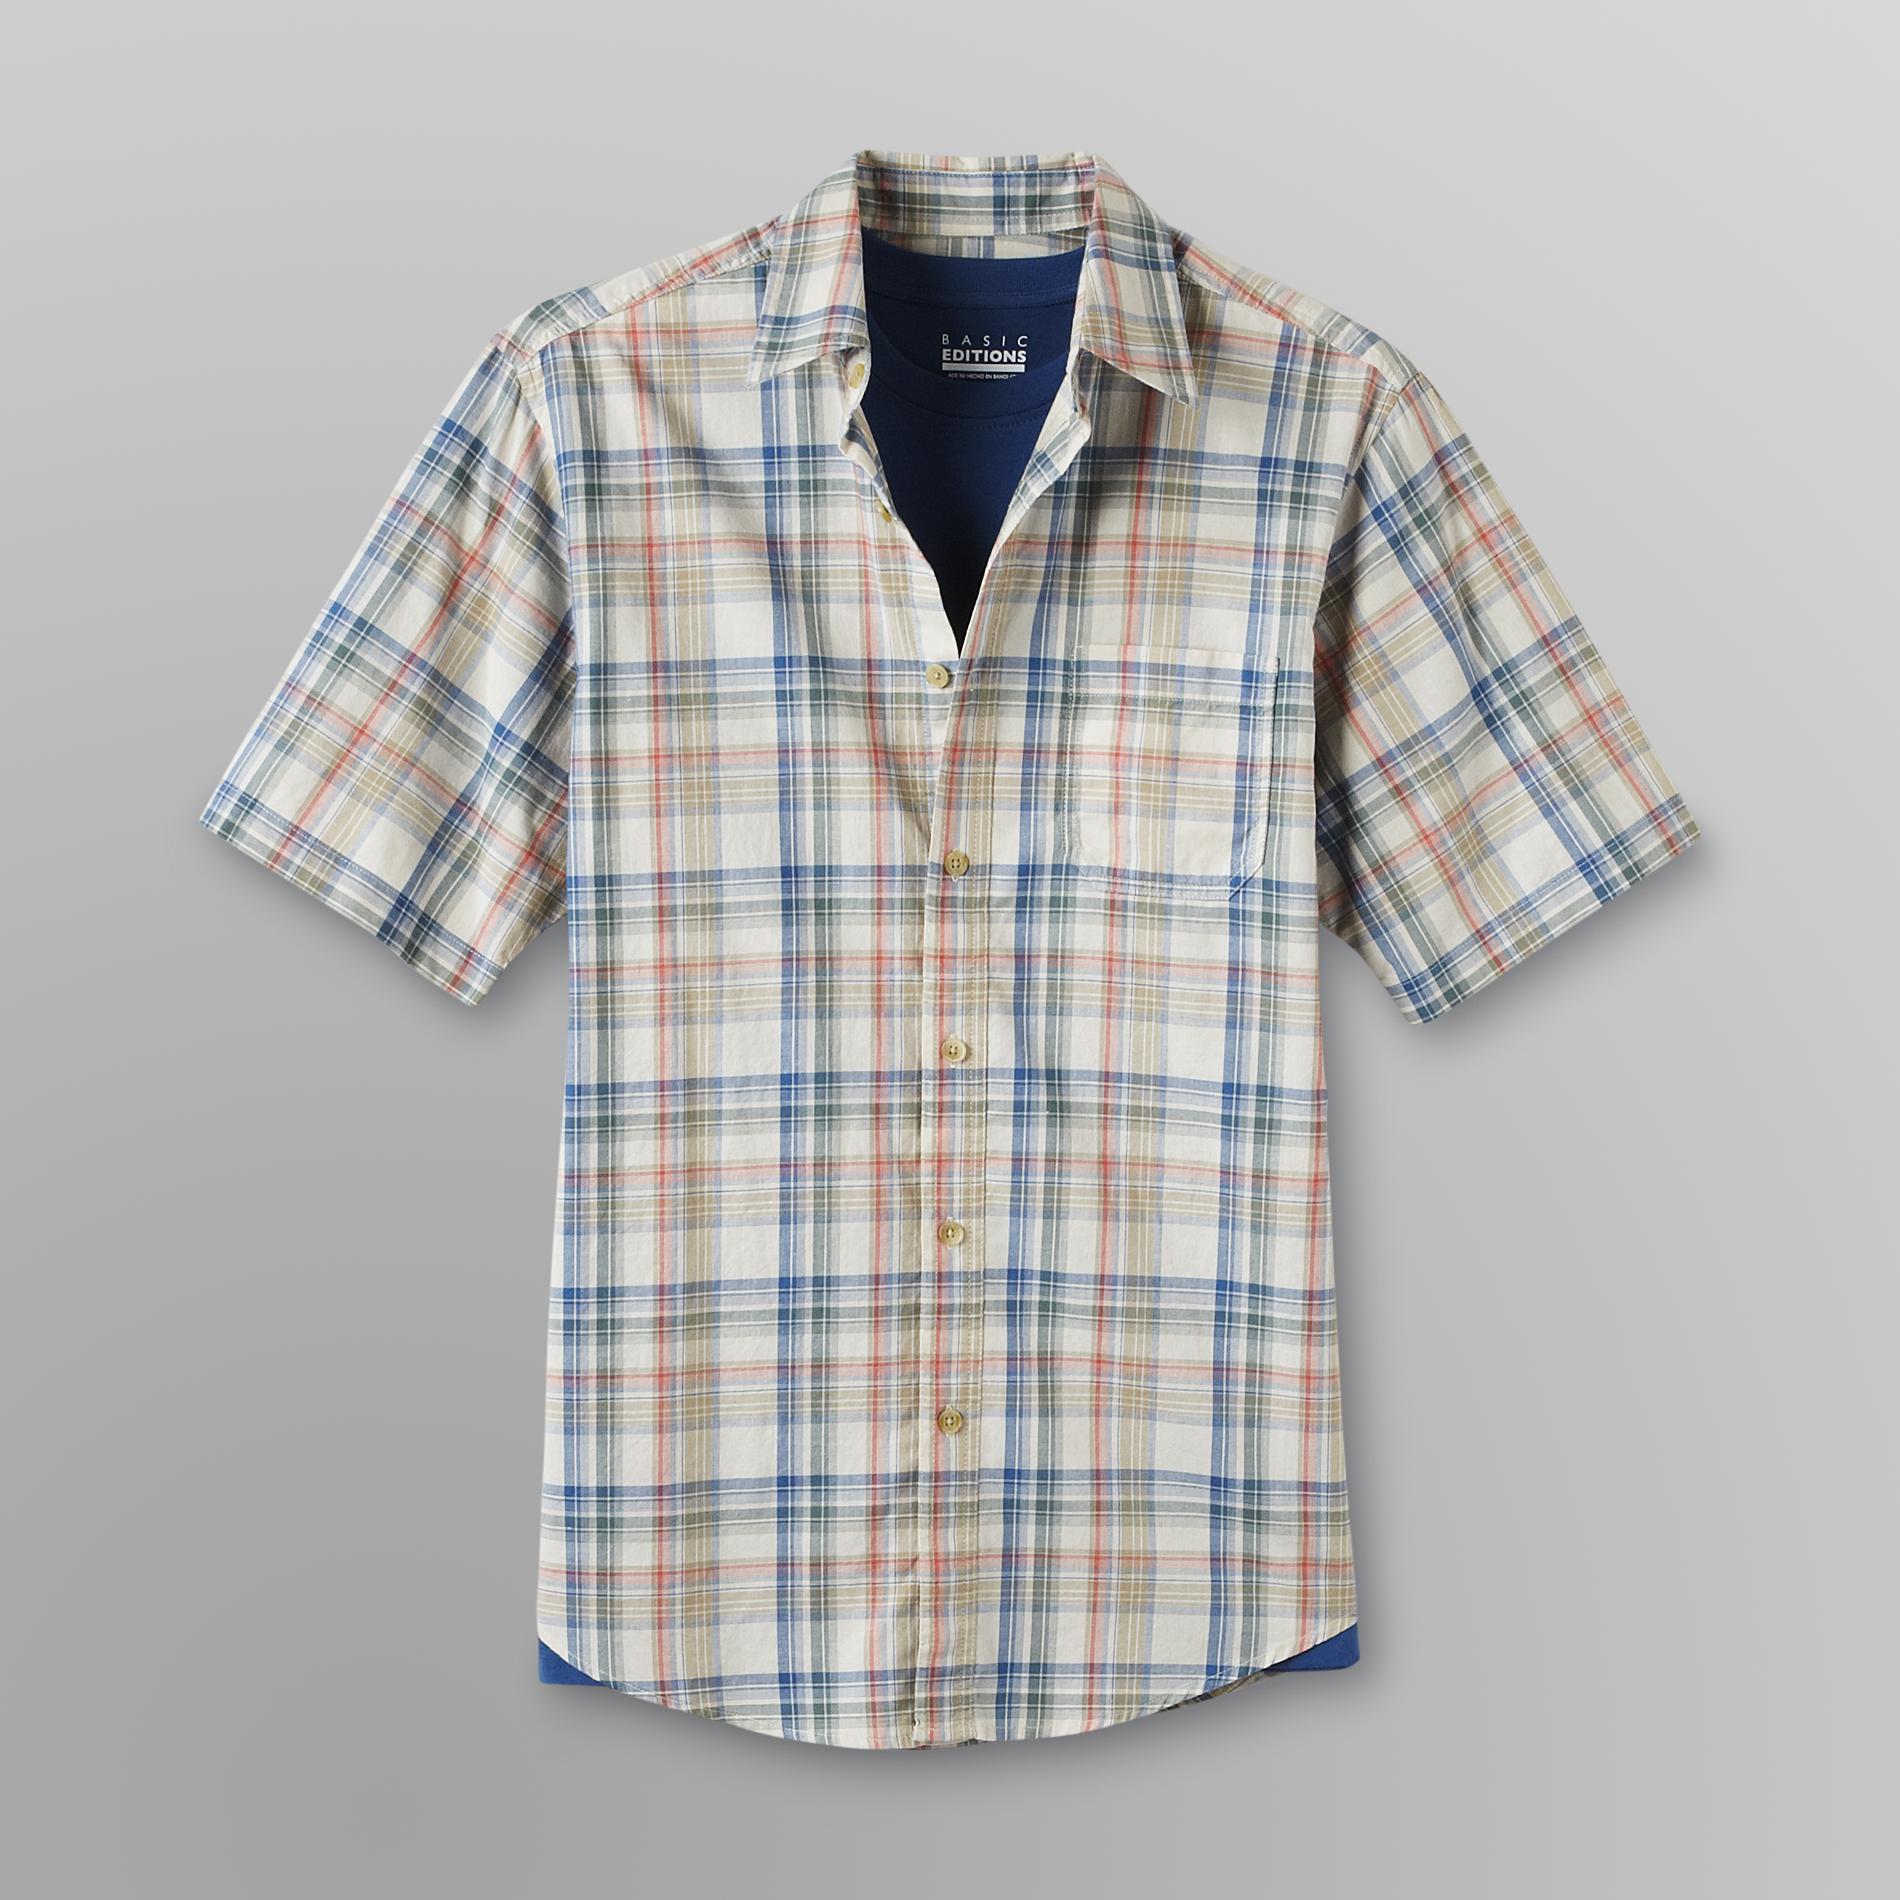 Basic Editions Men's Collared Shirt & T-Shirt - Plaid